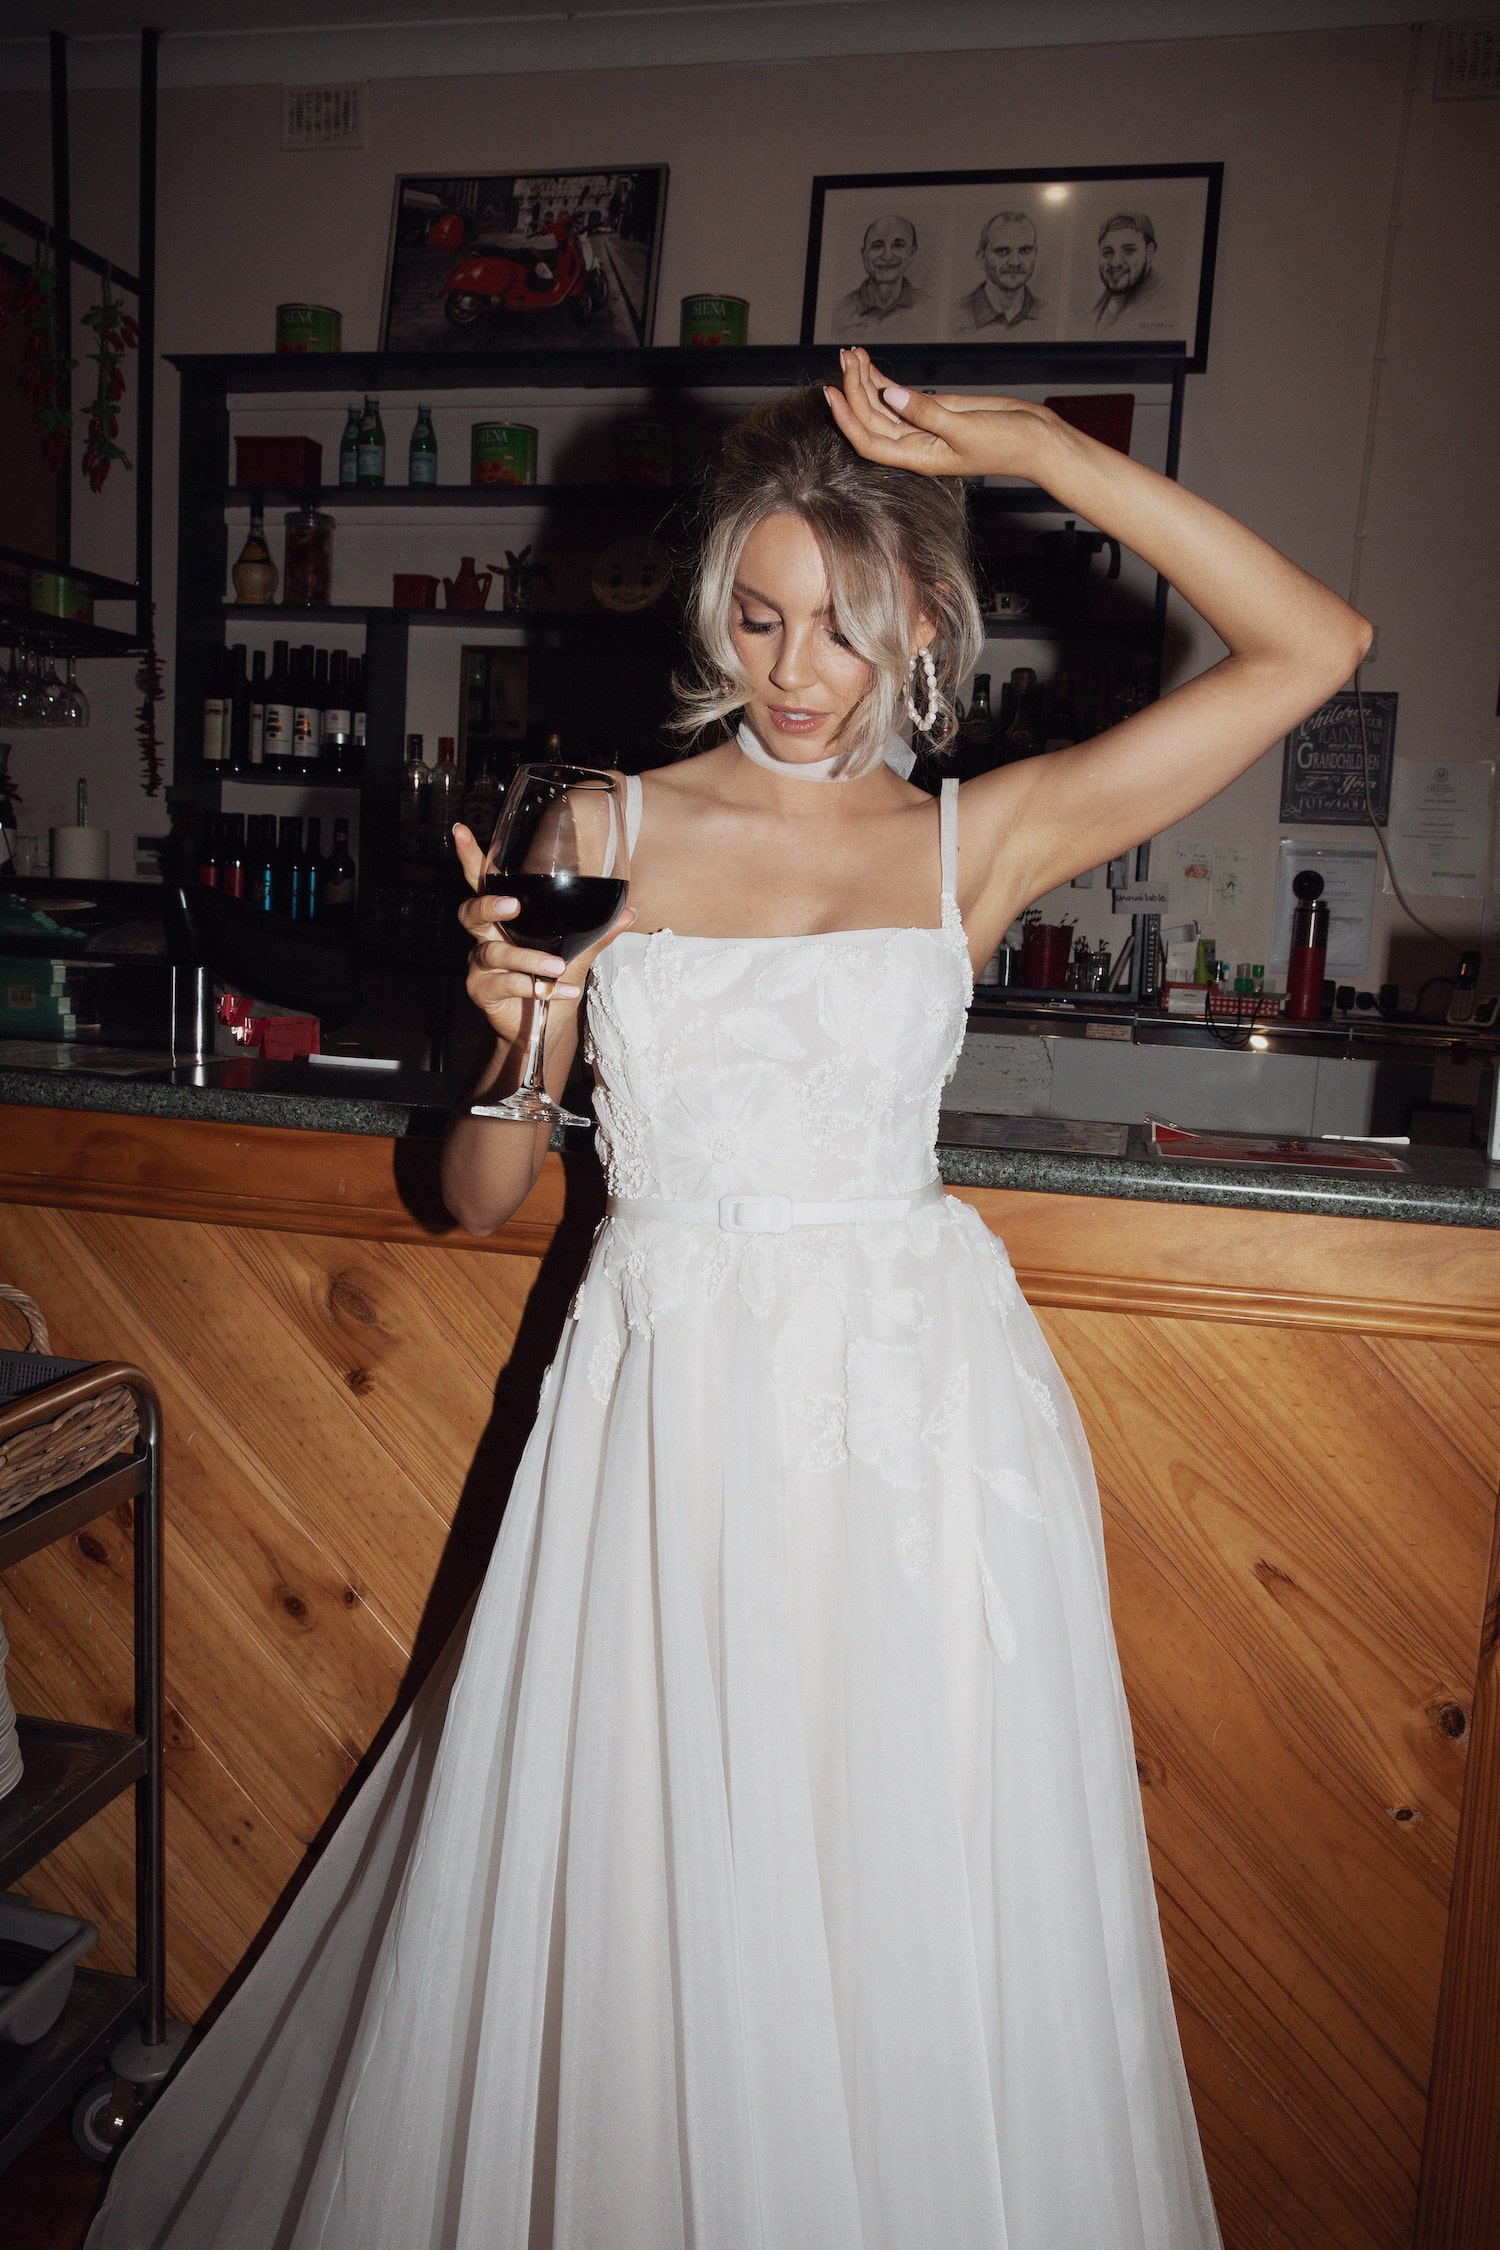 Model posing in Italian cafe wearing the Fiorella gown.